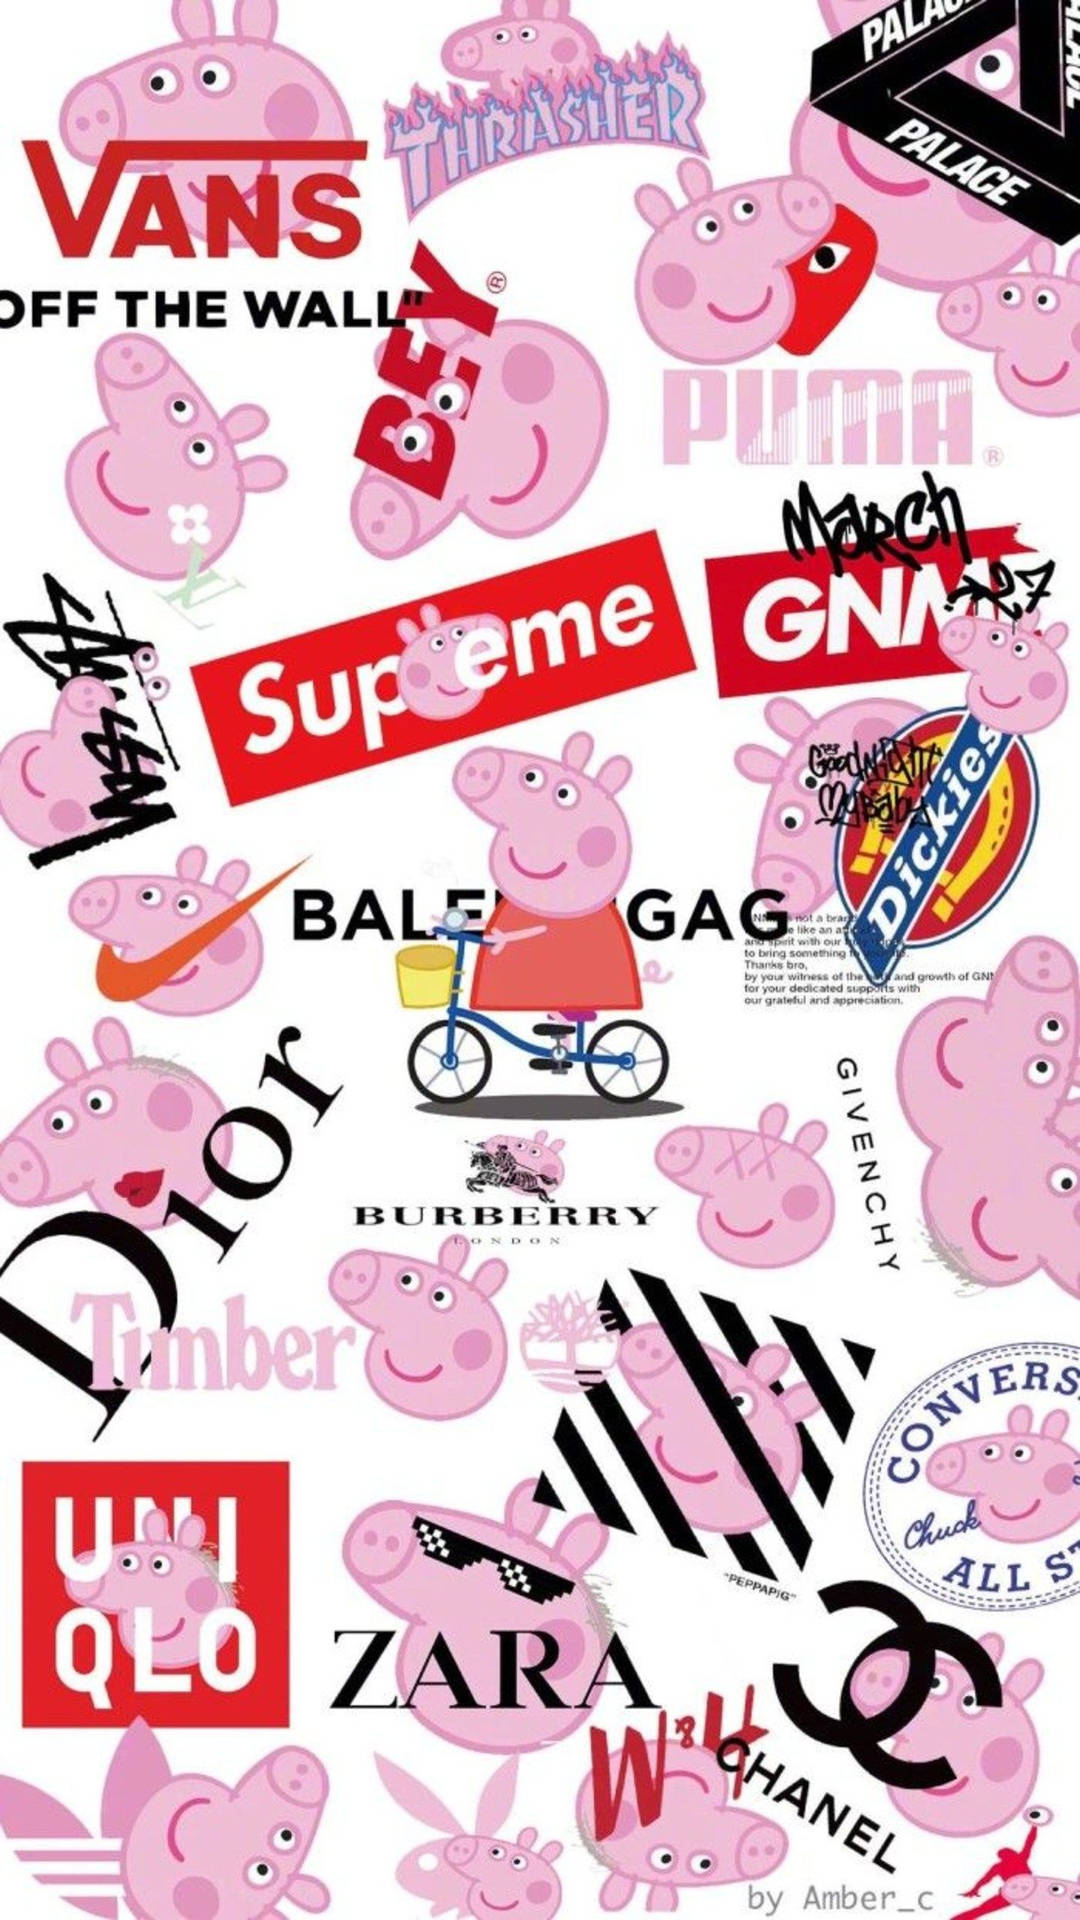 Brand Logos with Peppa Pig fan art wallpaper.